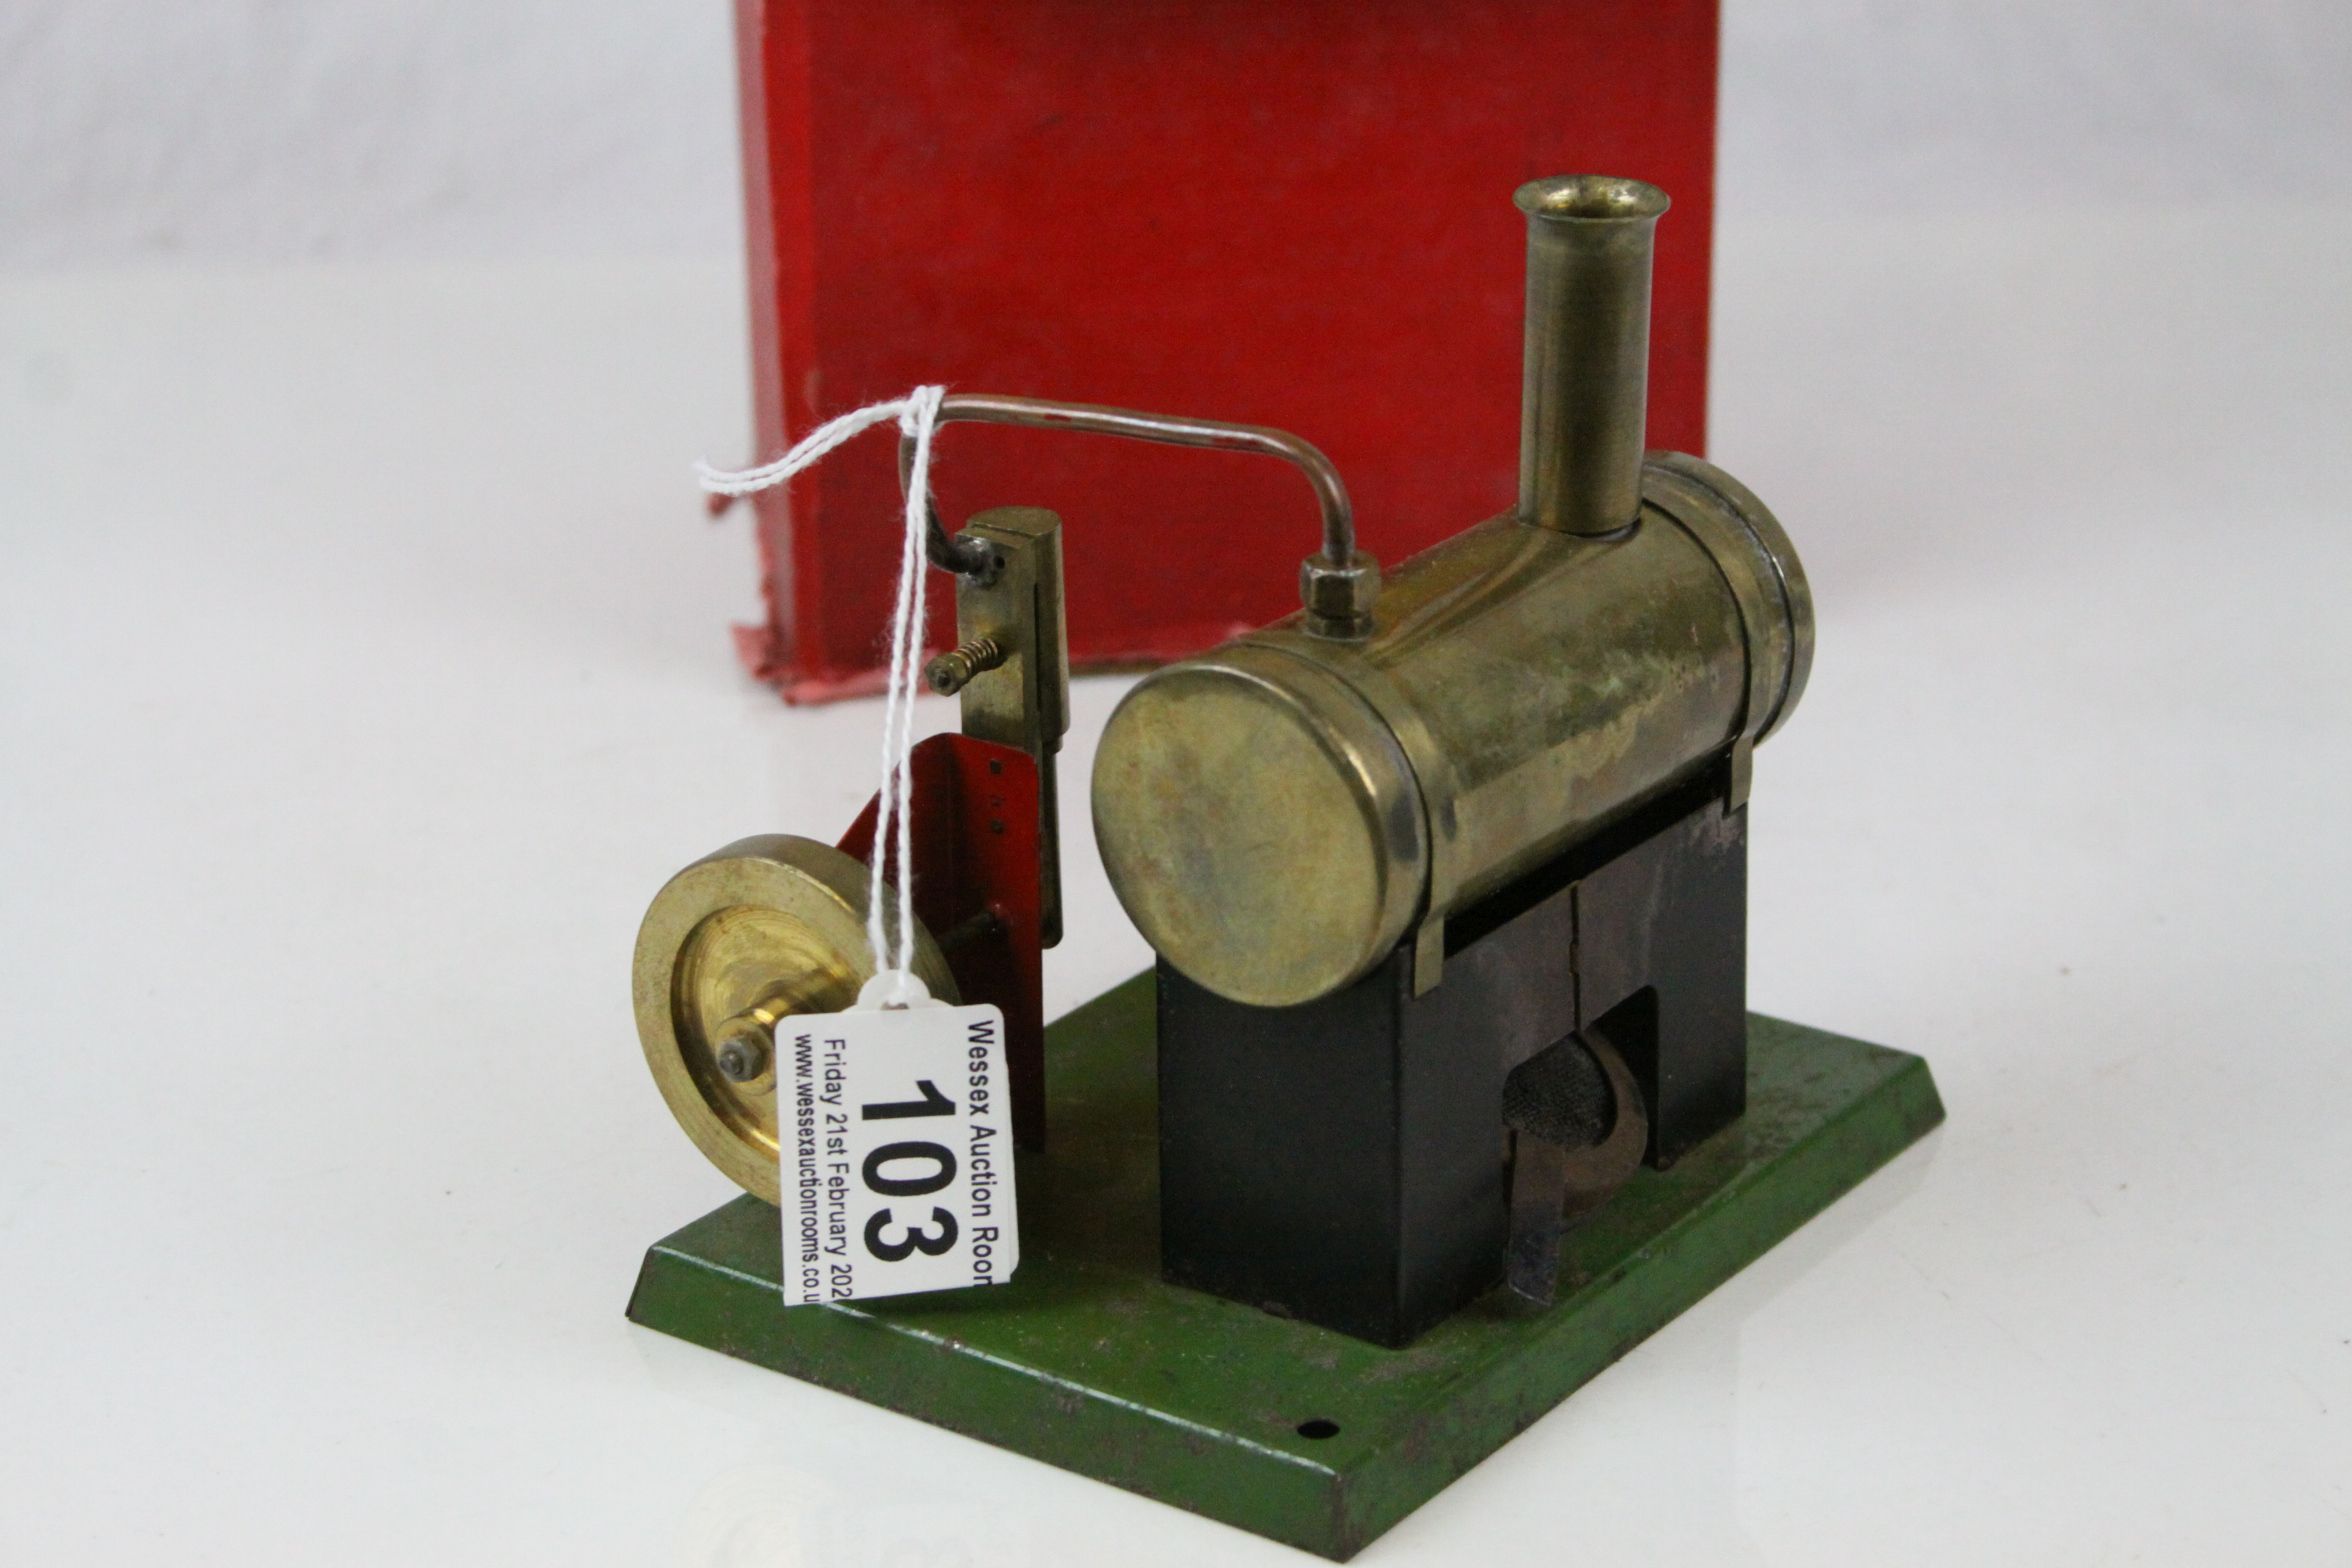 Boxed Latimer Productions Model Stationary Steam Engine, Plane Model - Image 2 of 4